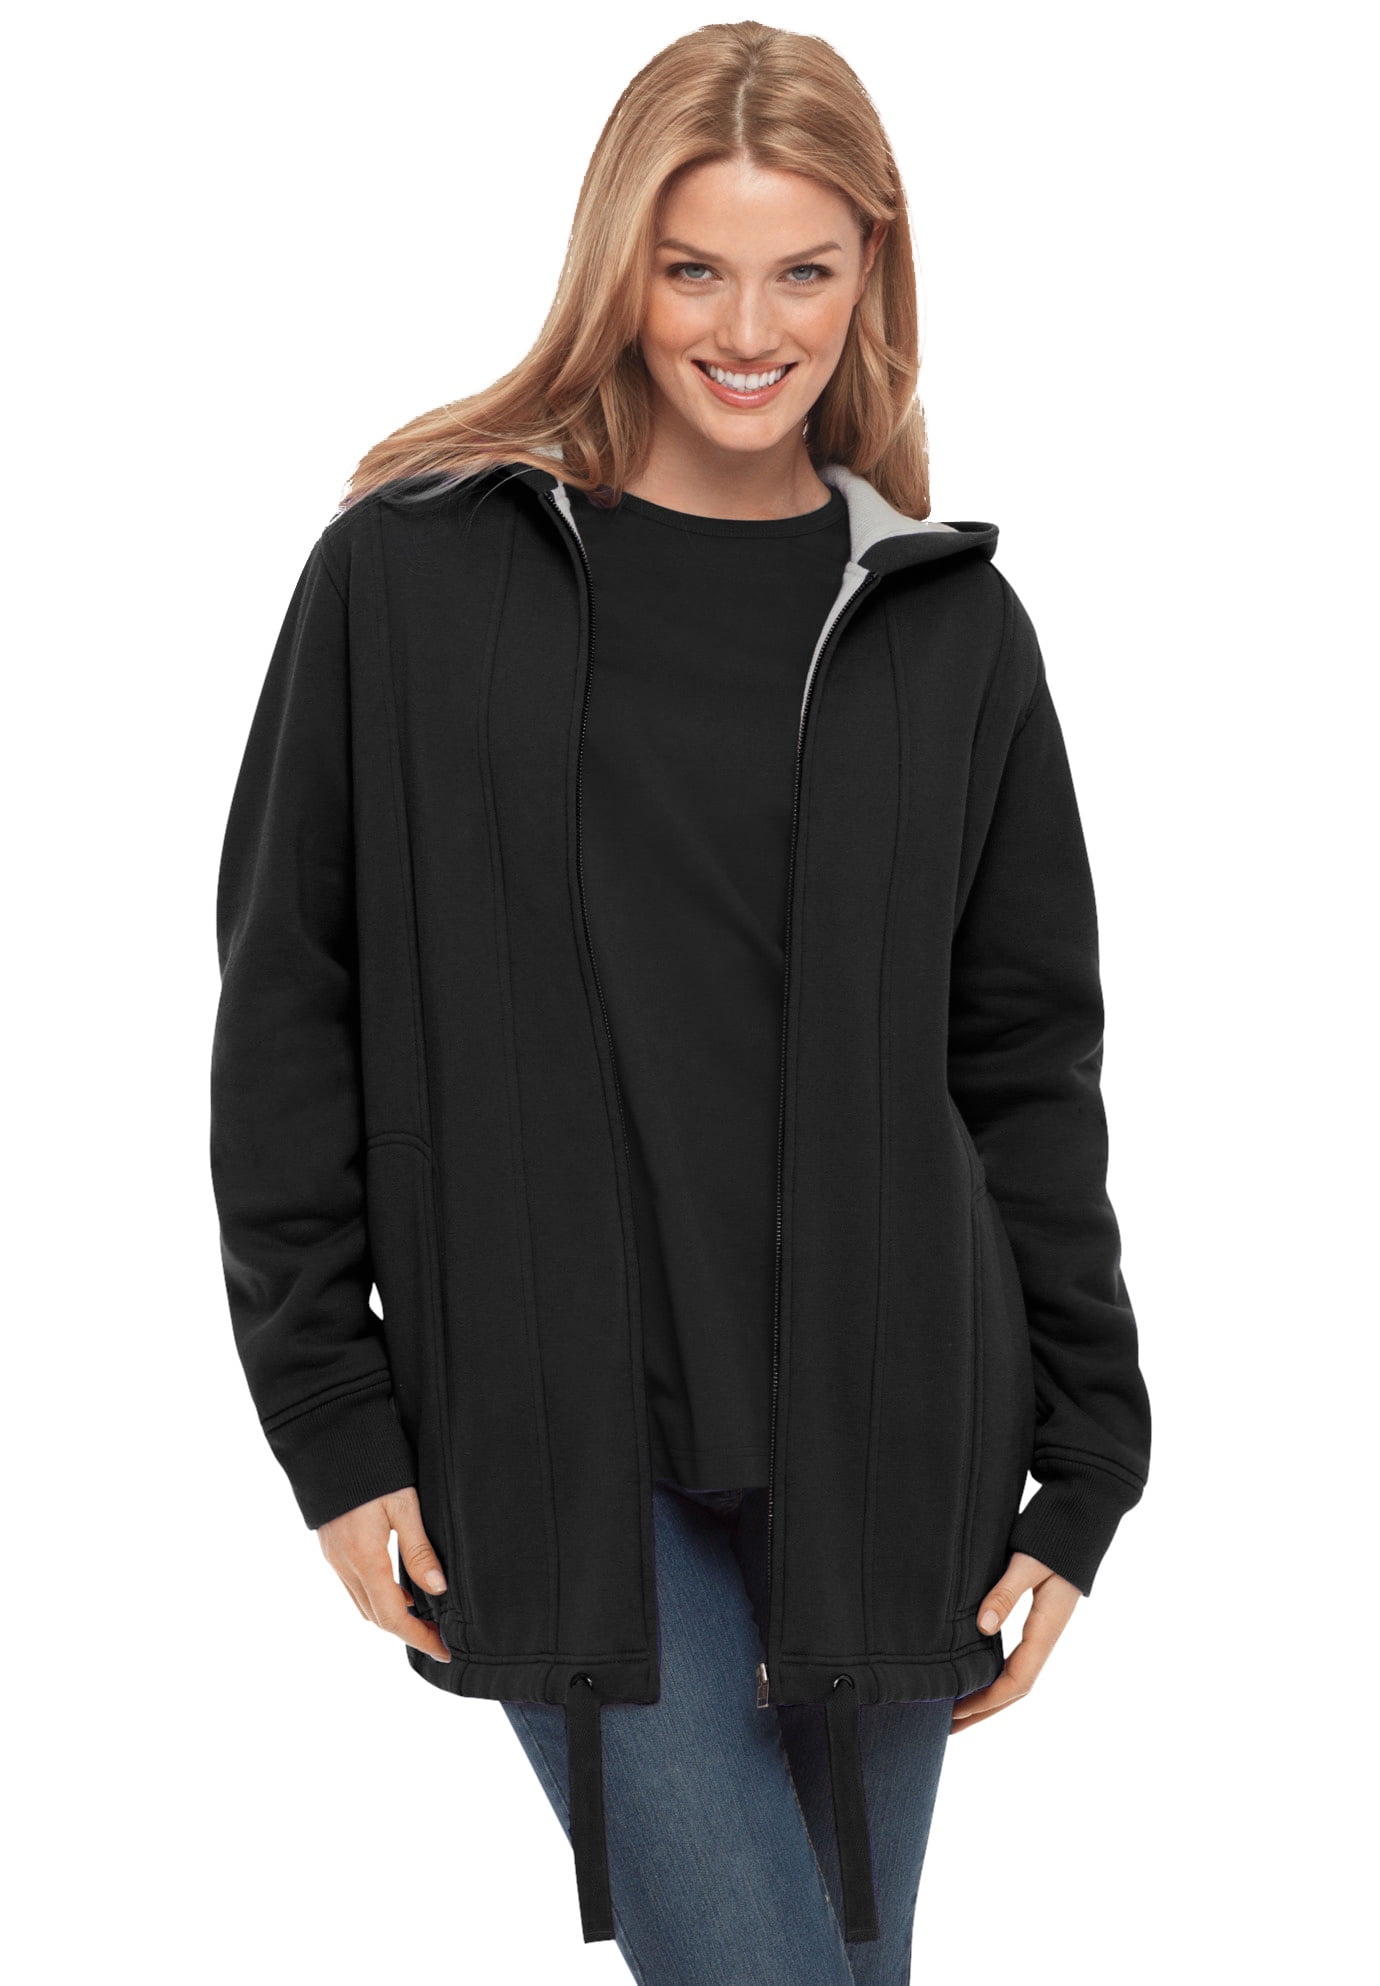 Women's Basic Zip Up Long Sleeve Hoodie Jacket Lined Drawstring Hood w/ Pockets 